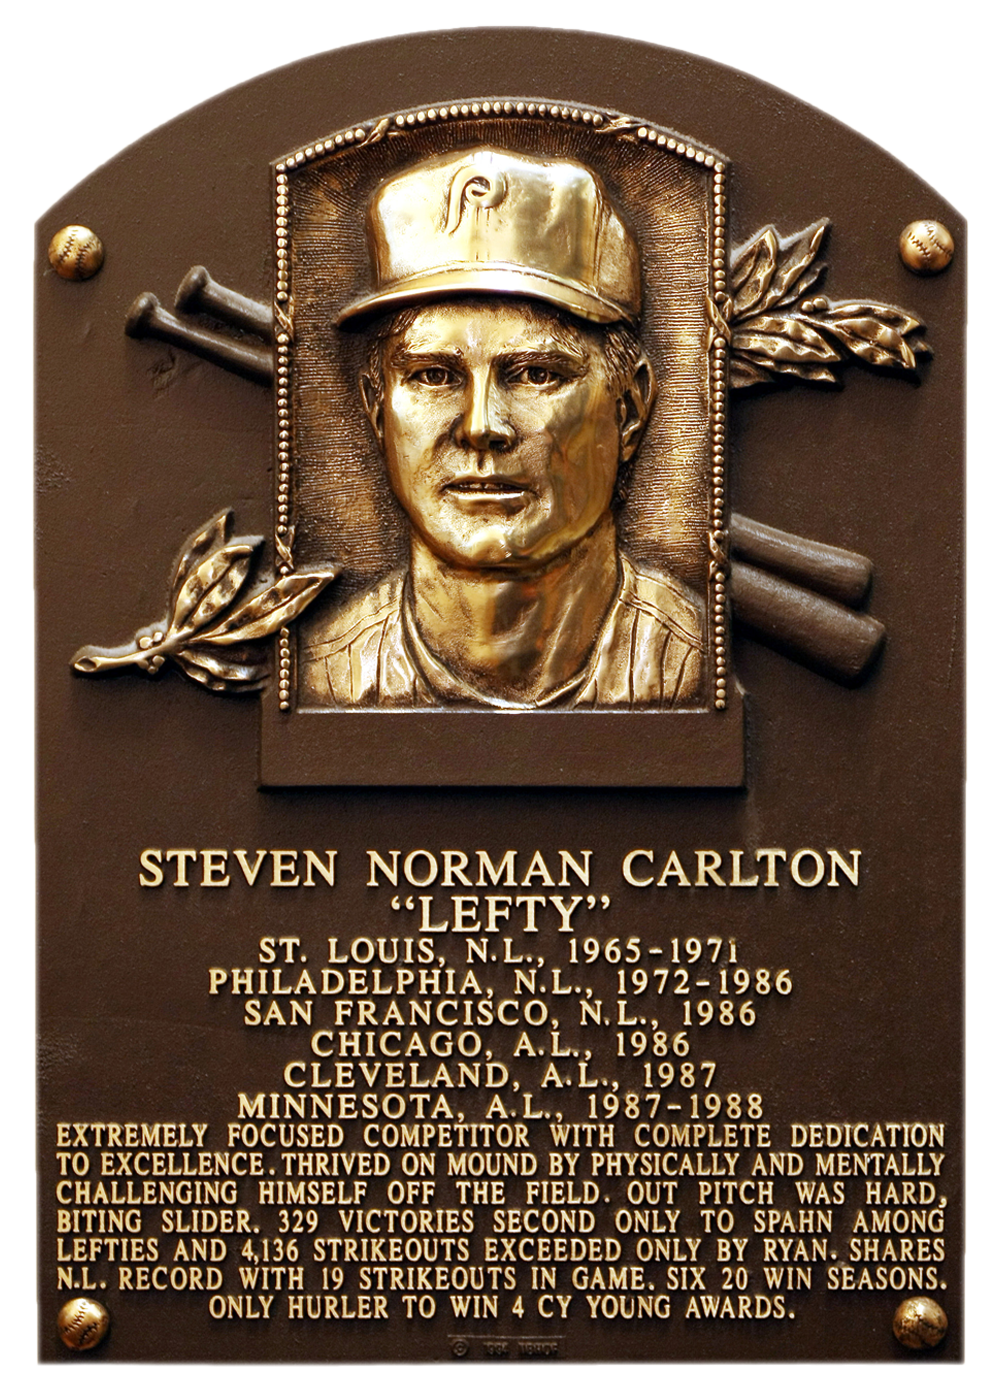 Steve Carlton Hall of Fame plaque